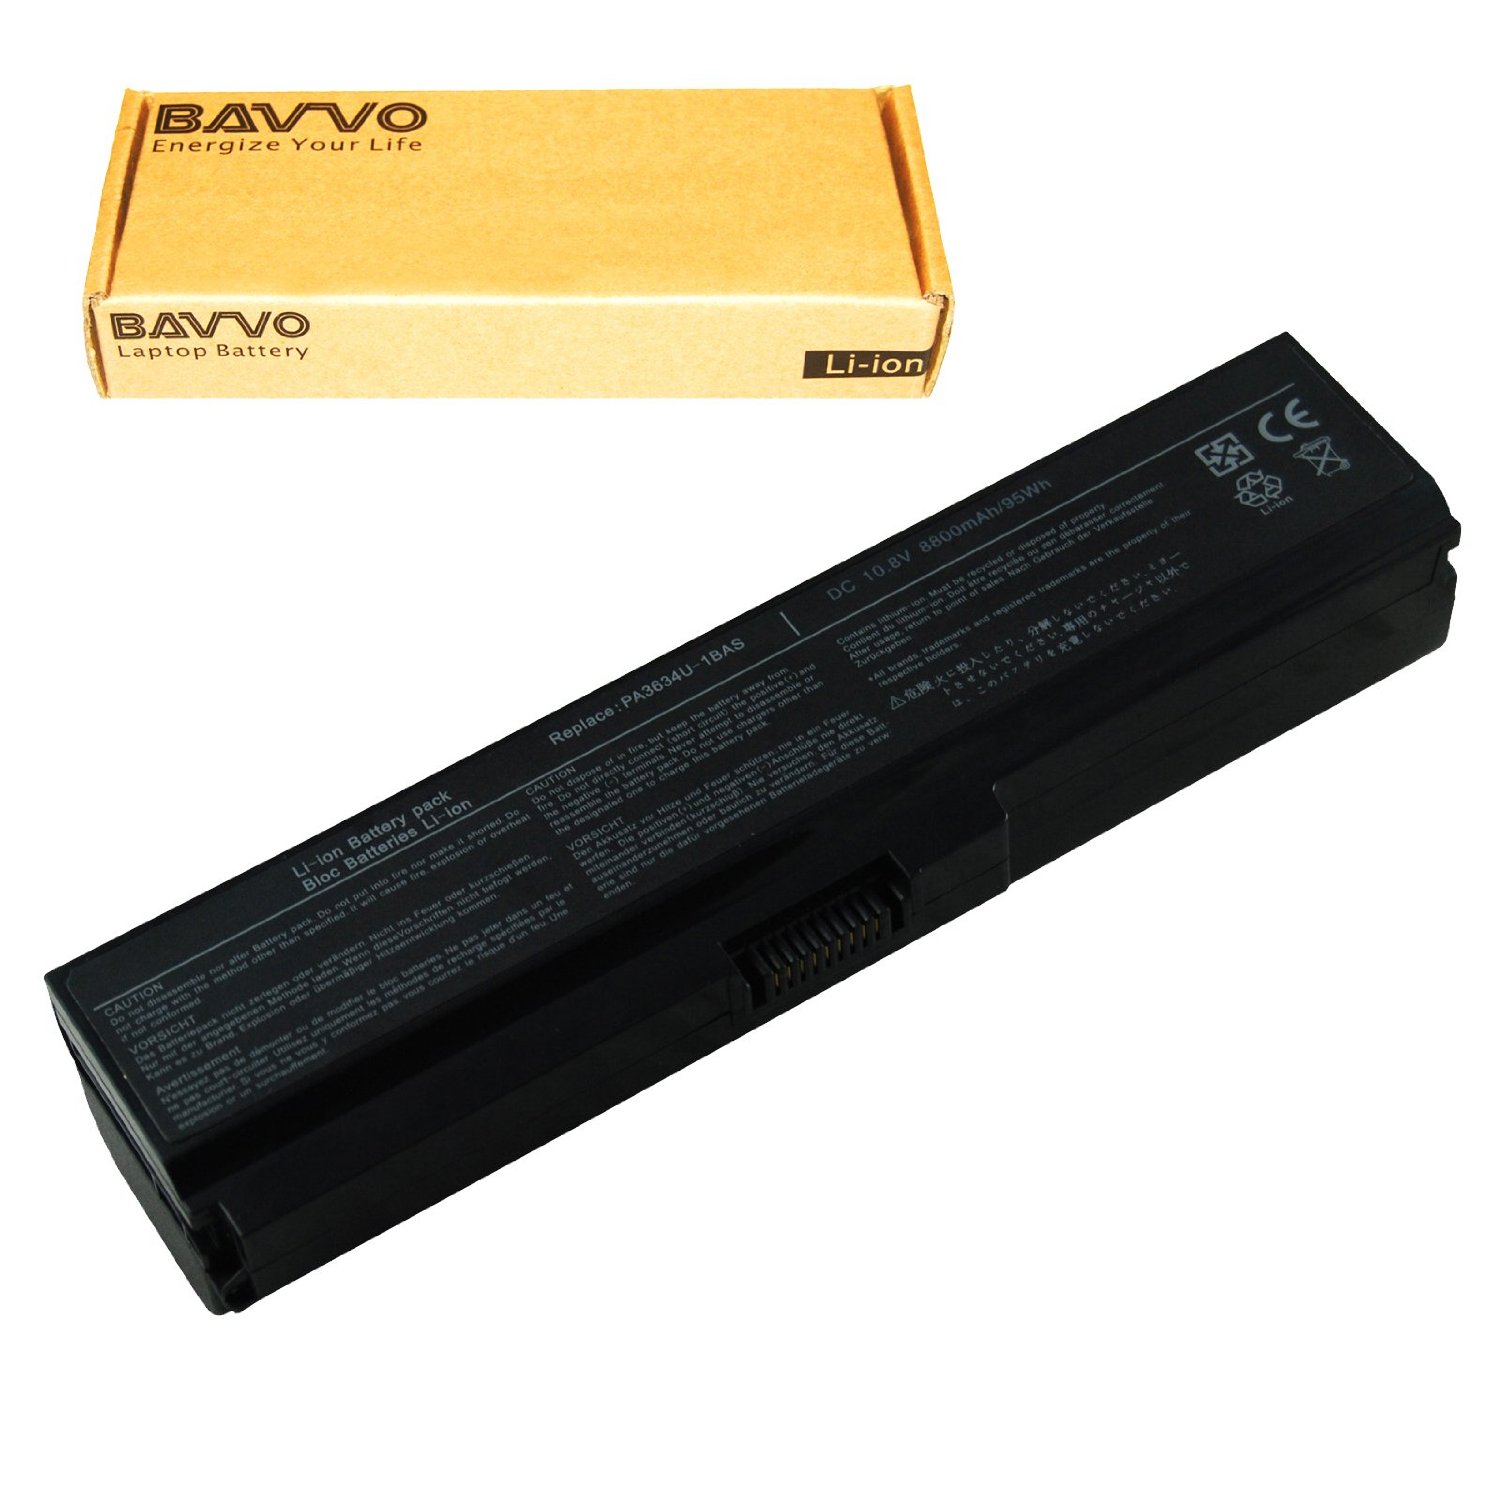 TOSHIBA Satellite L655D-S5050 Laptop Battery - Premium Bavvo® 12-cell Li-ion Battery